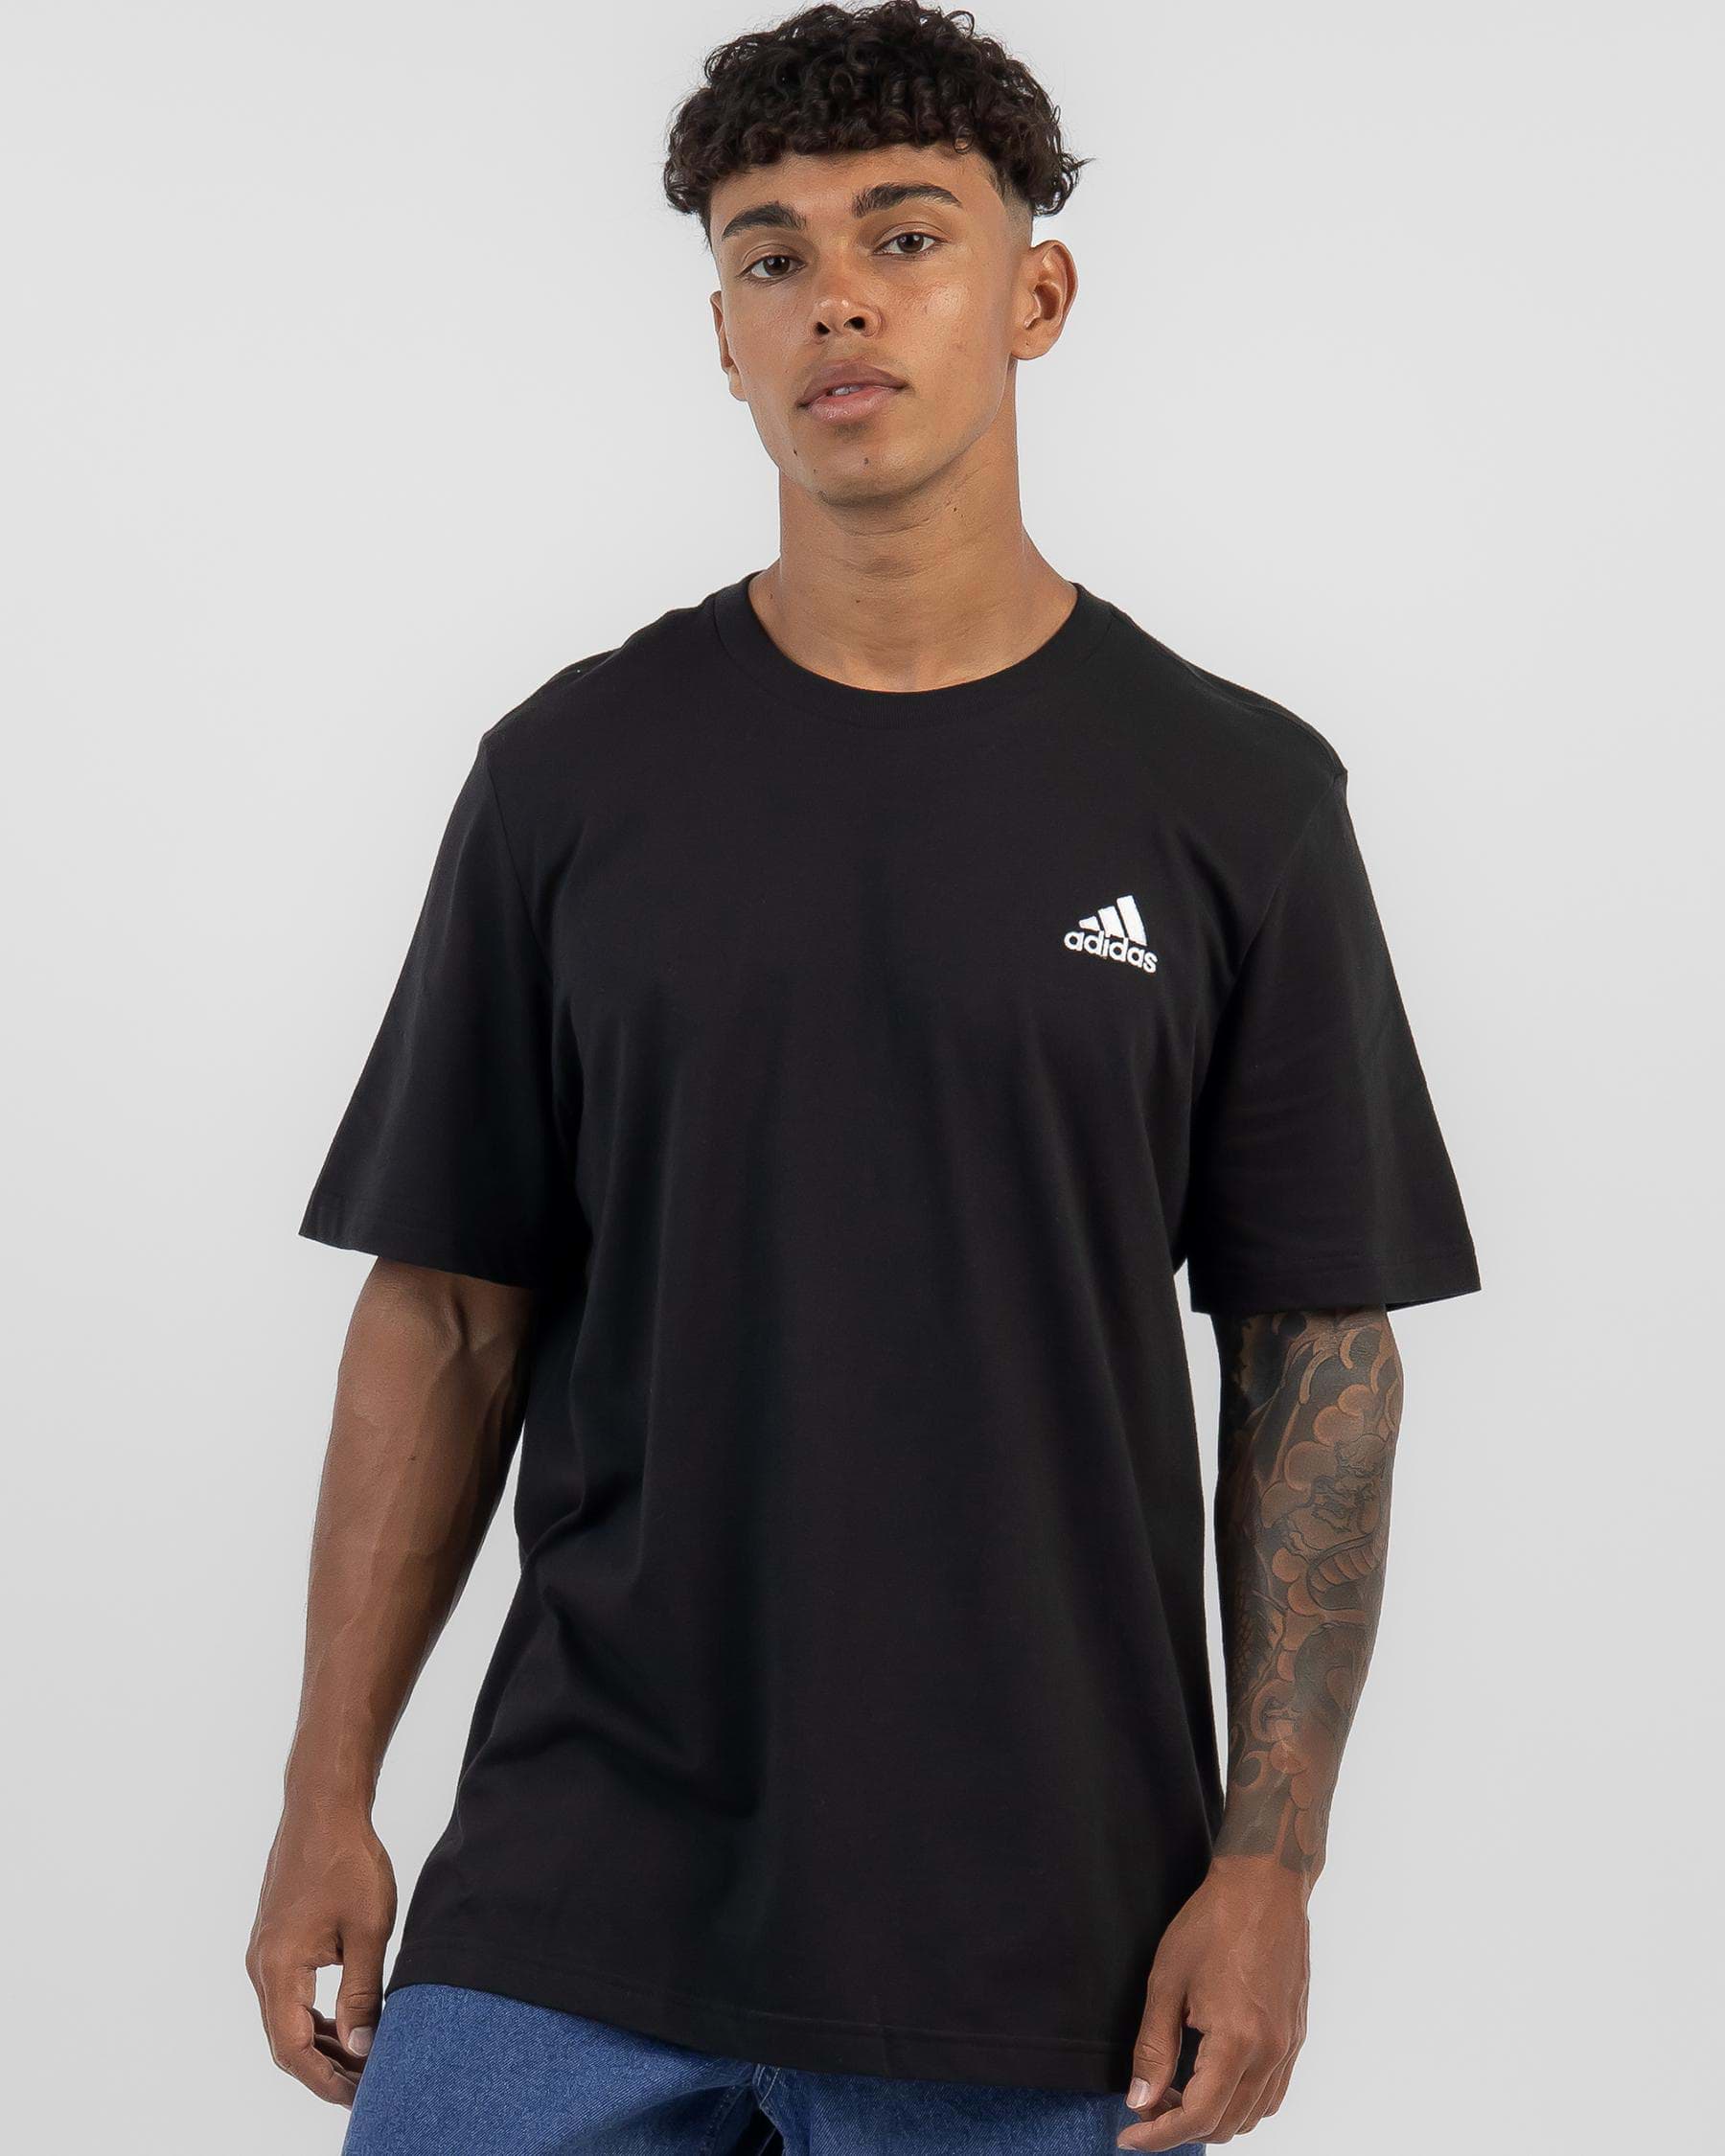 Adidas Small Logo T-Shirt In Black - Fast Shipping & Easy Returns ...